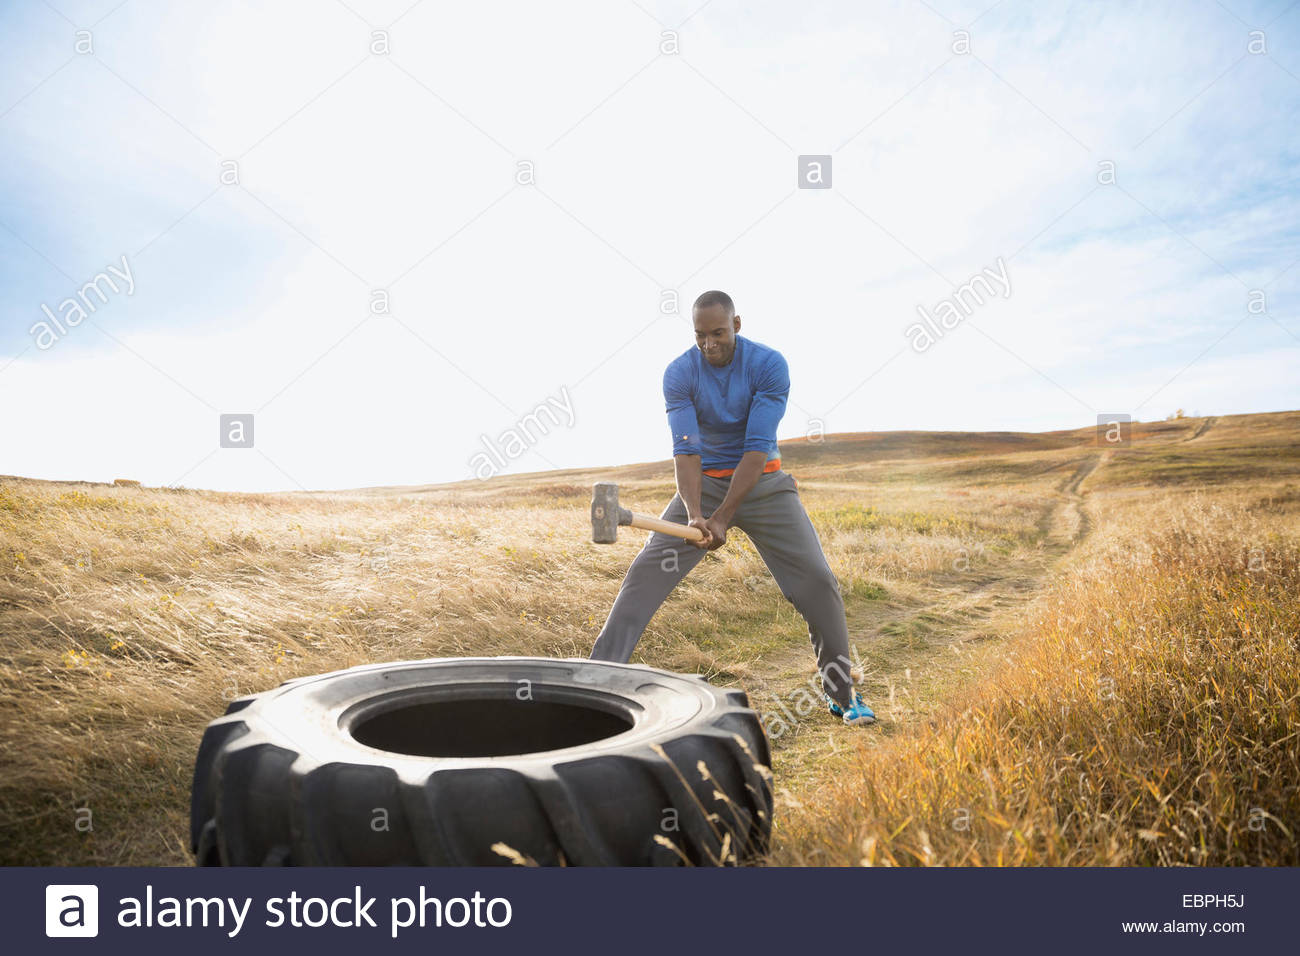 Man hammering crossfit tire in sunny rural field Stock Photo